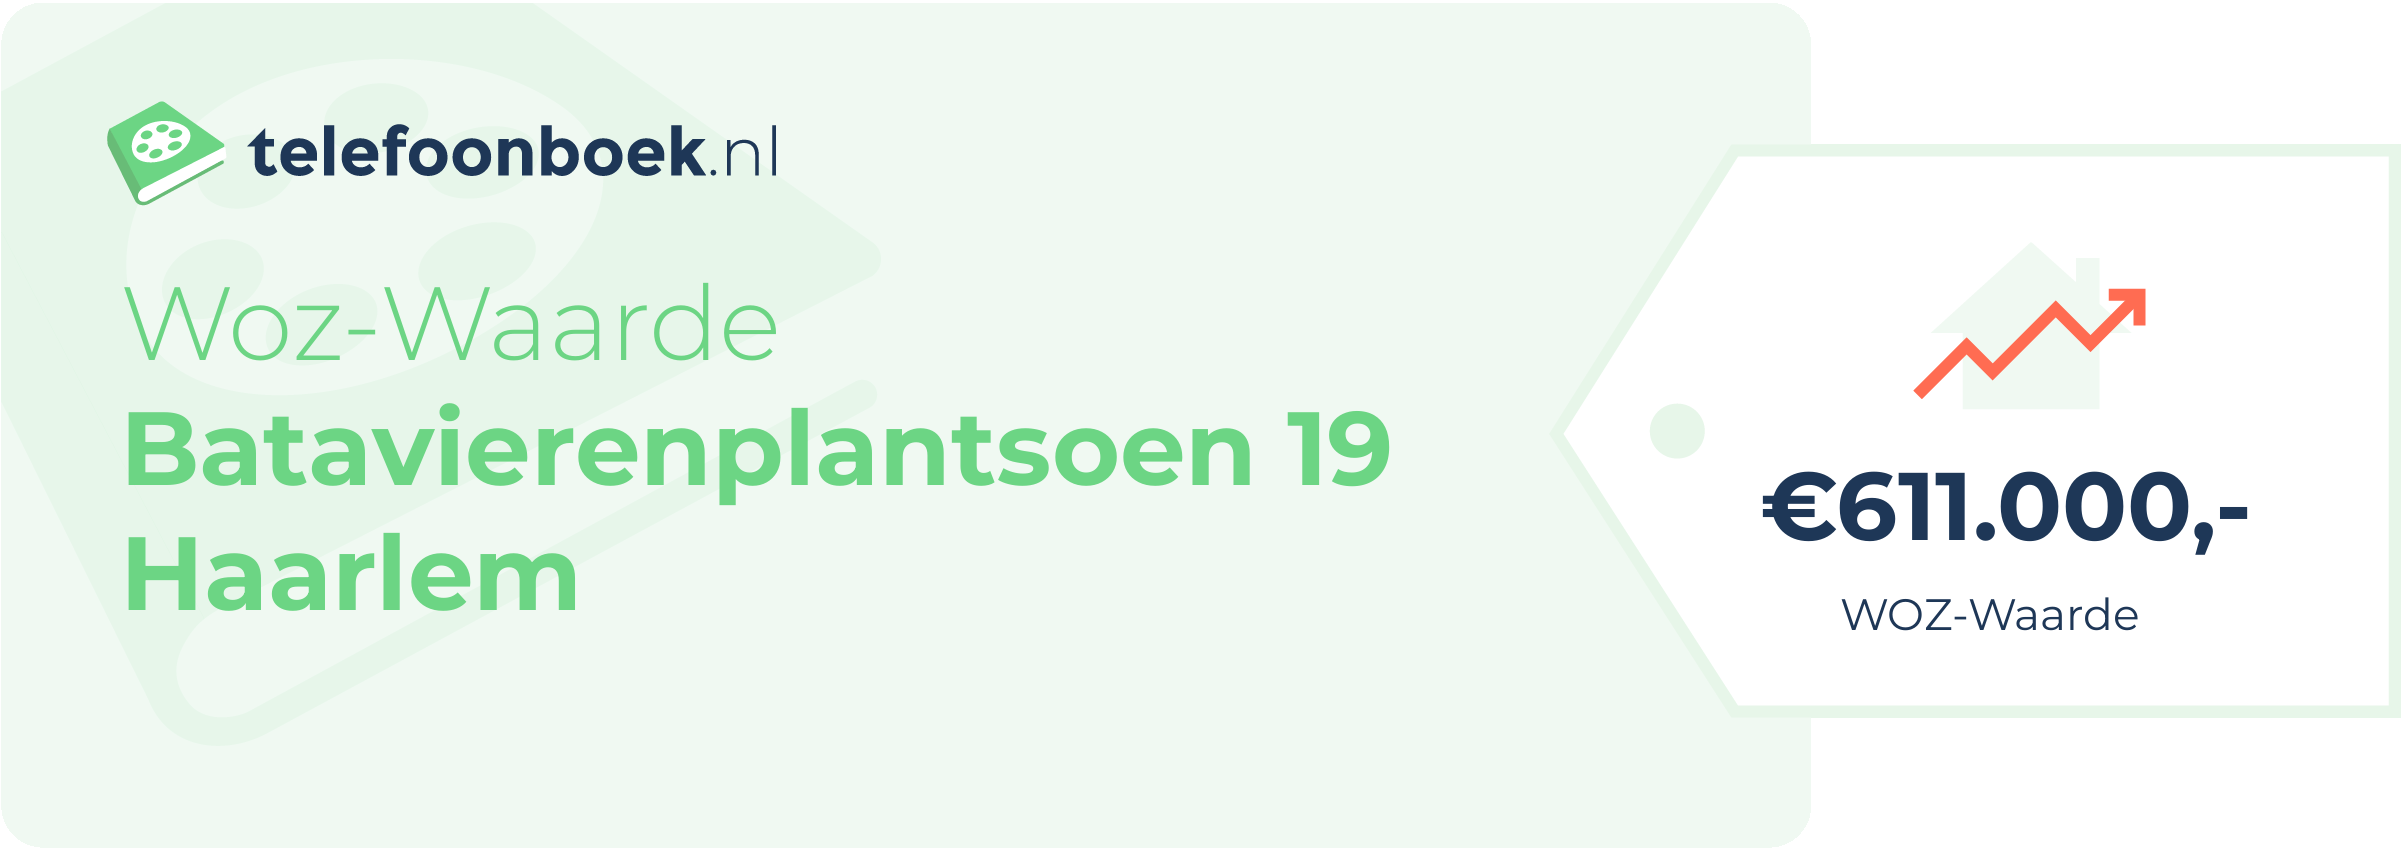 WOZ-waarde Batavierenplantsoen 19 Haarlem